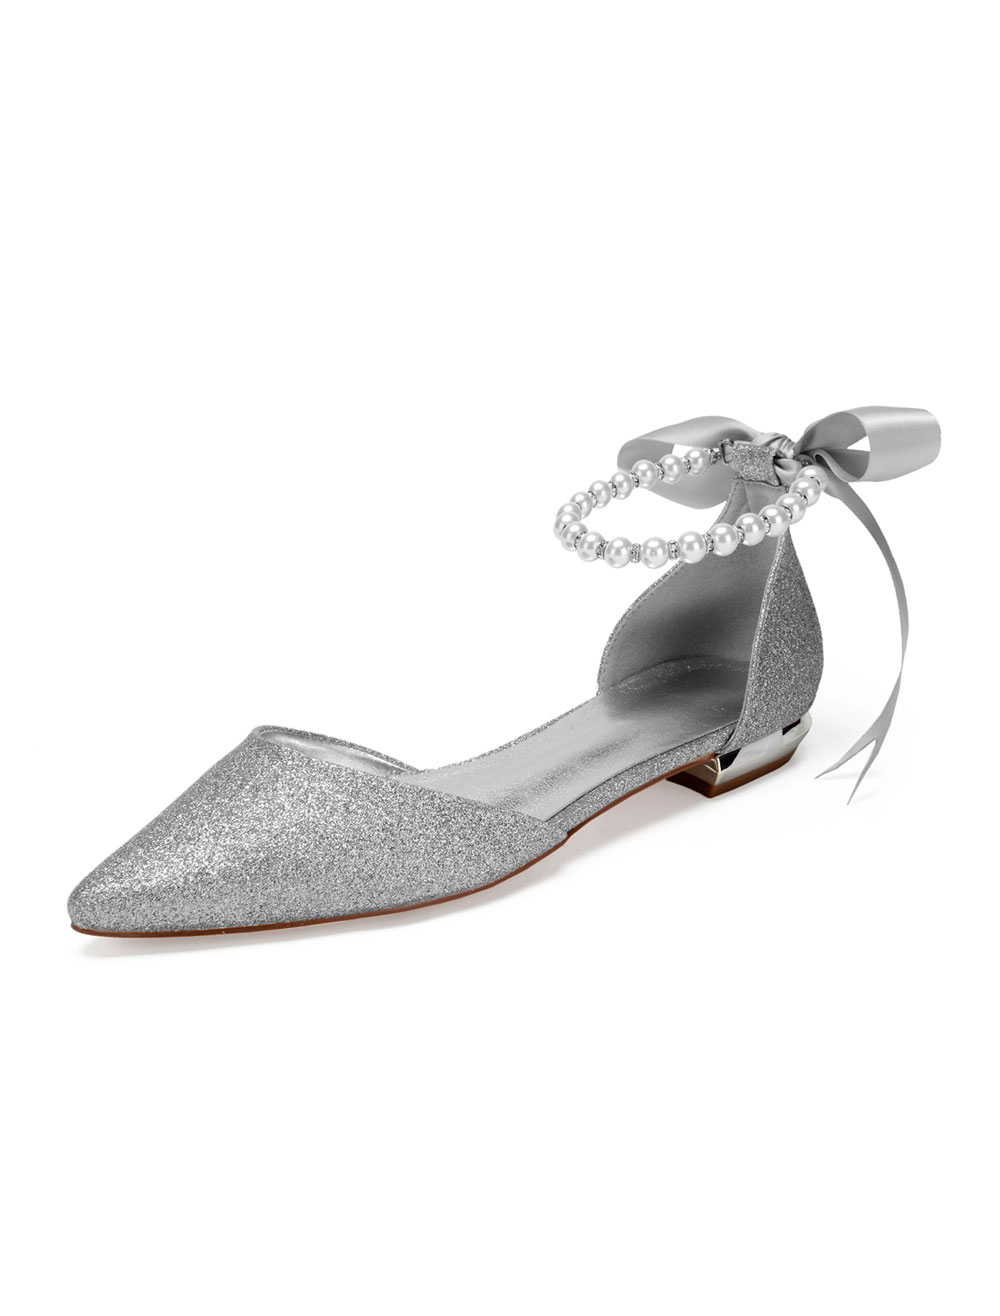 flat glitter wedding shoes